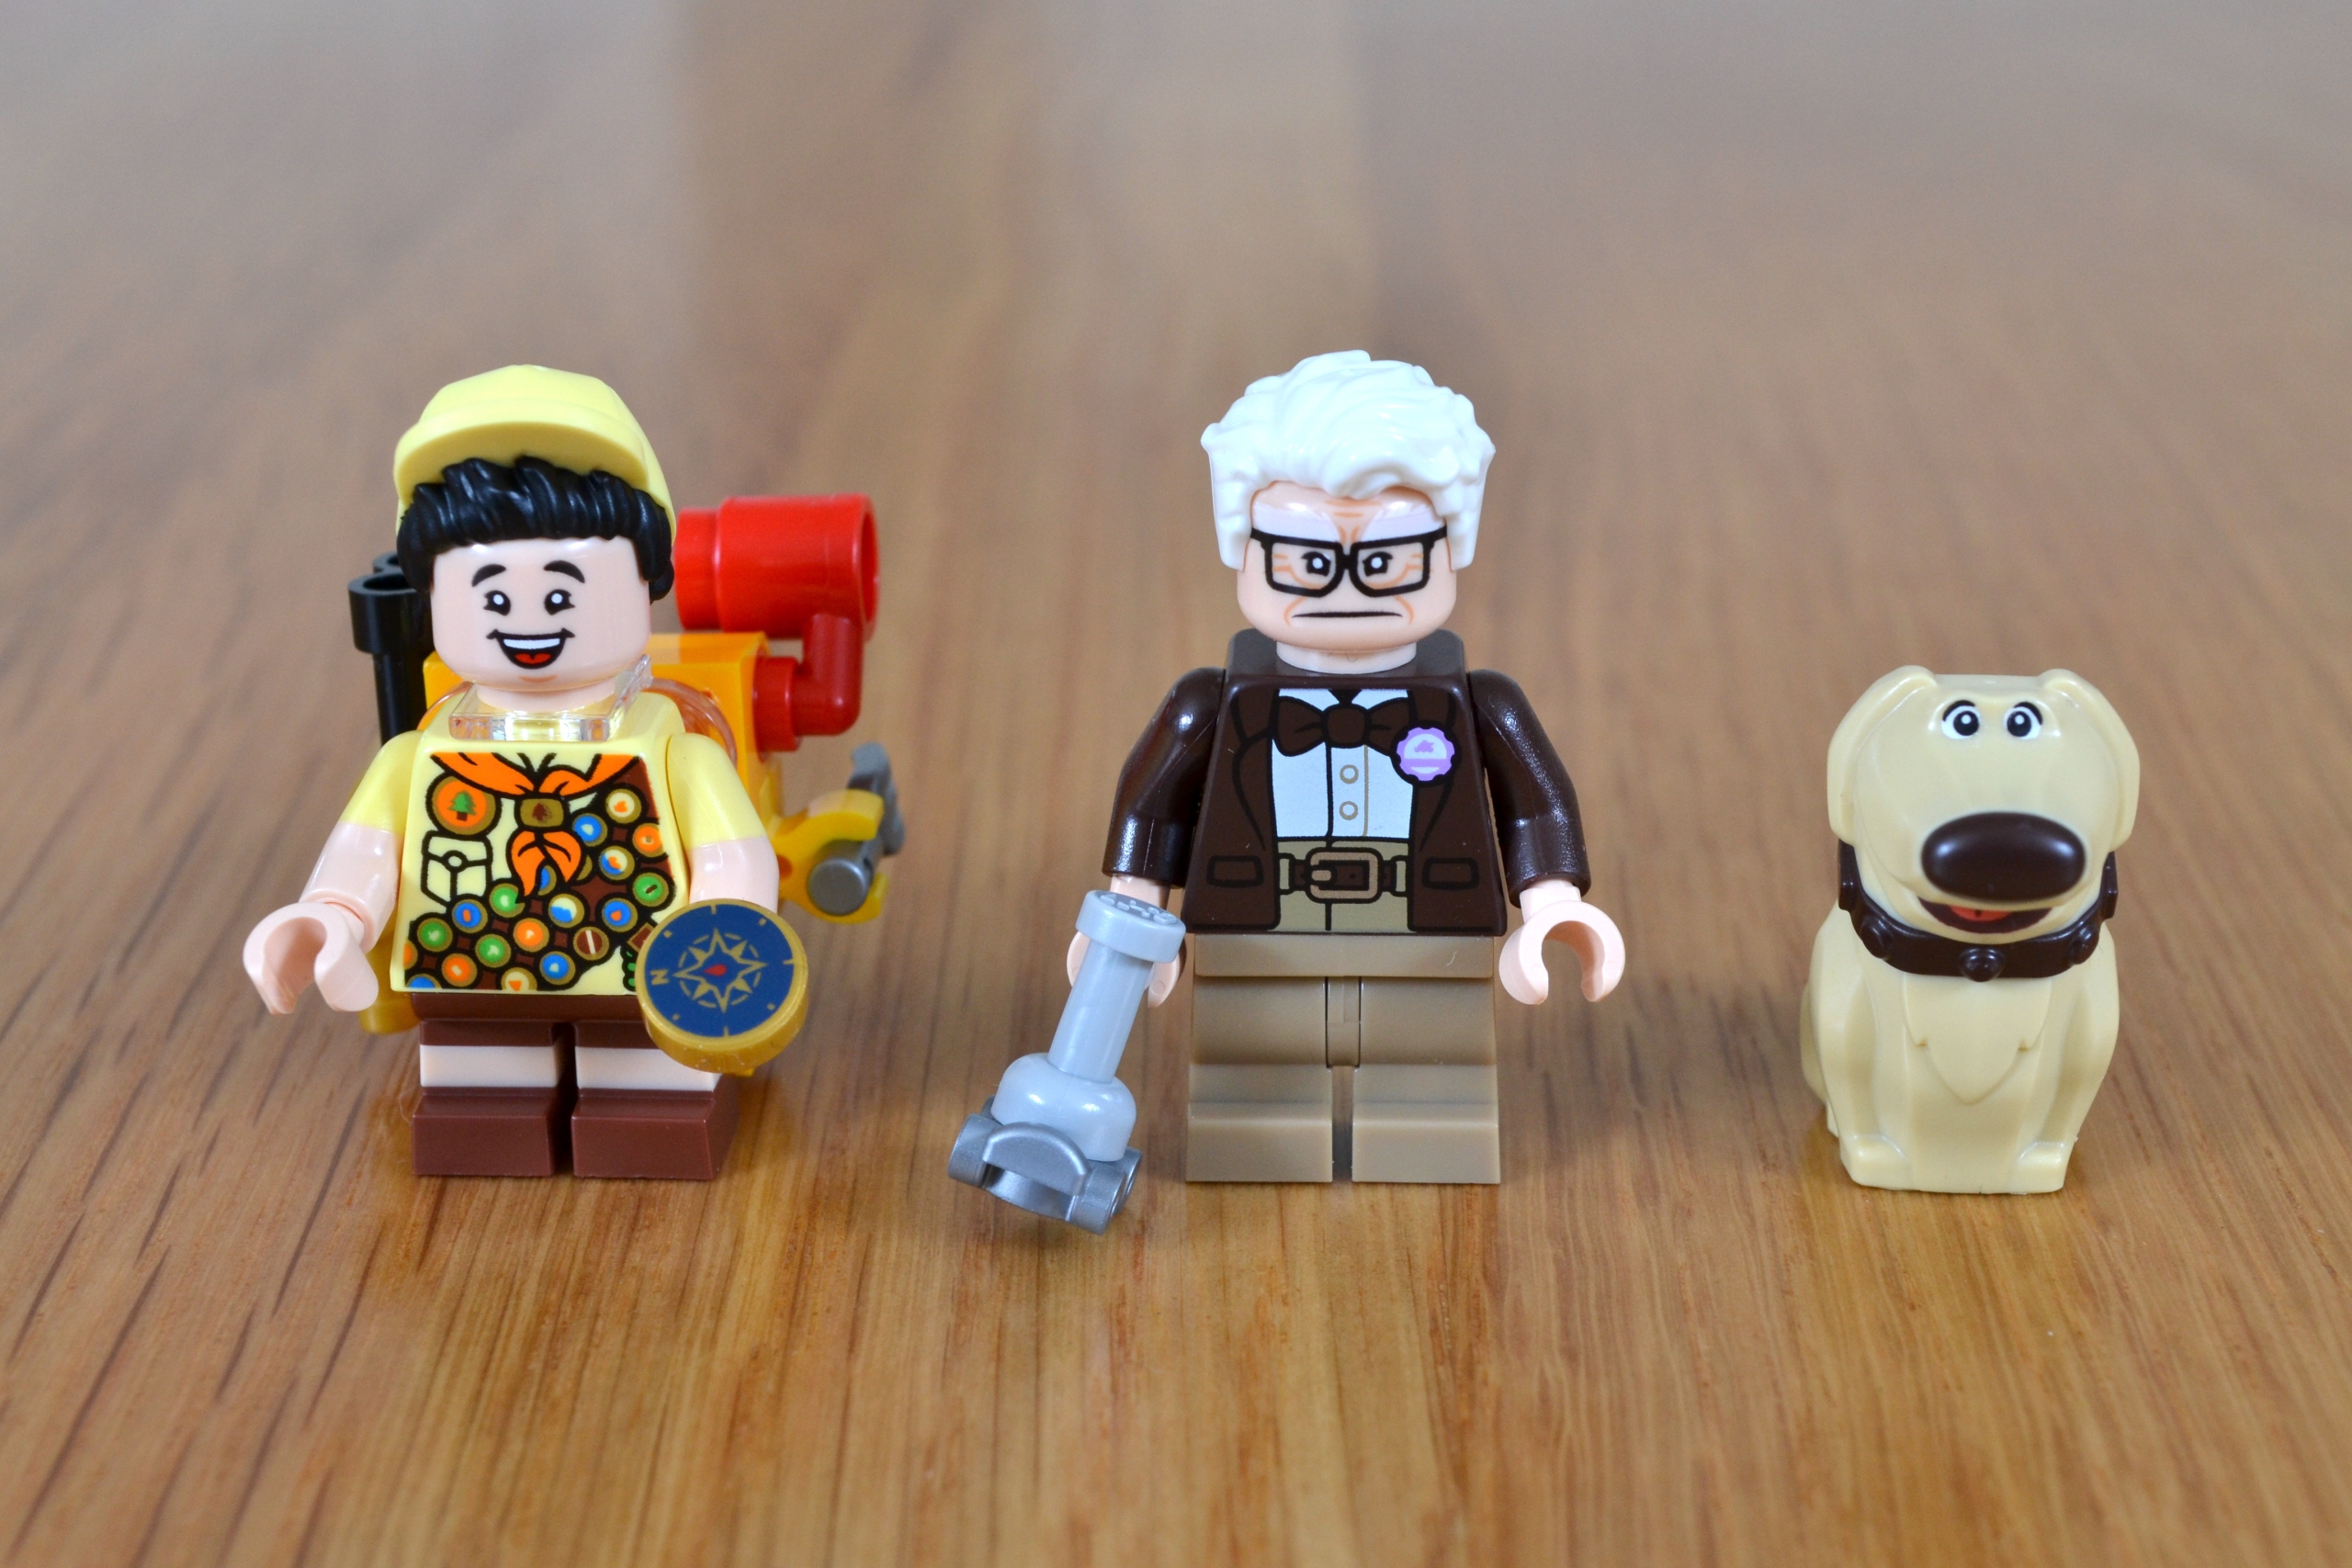 LEGO IDEAS - Disney Pixar's Up Characters